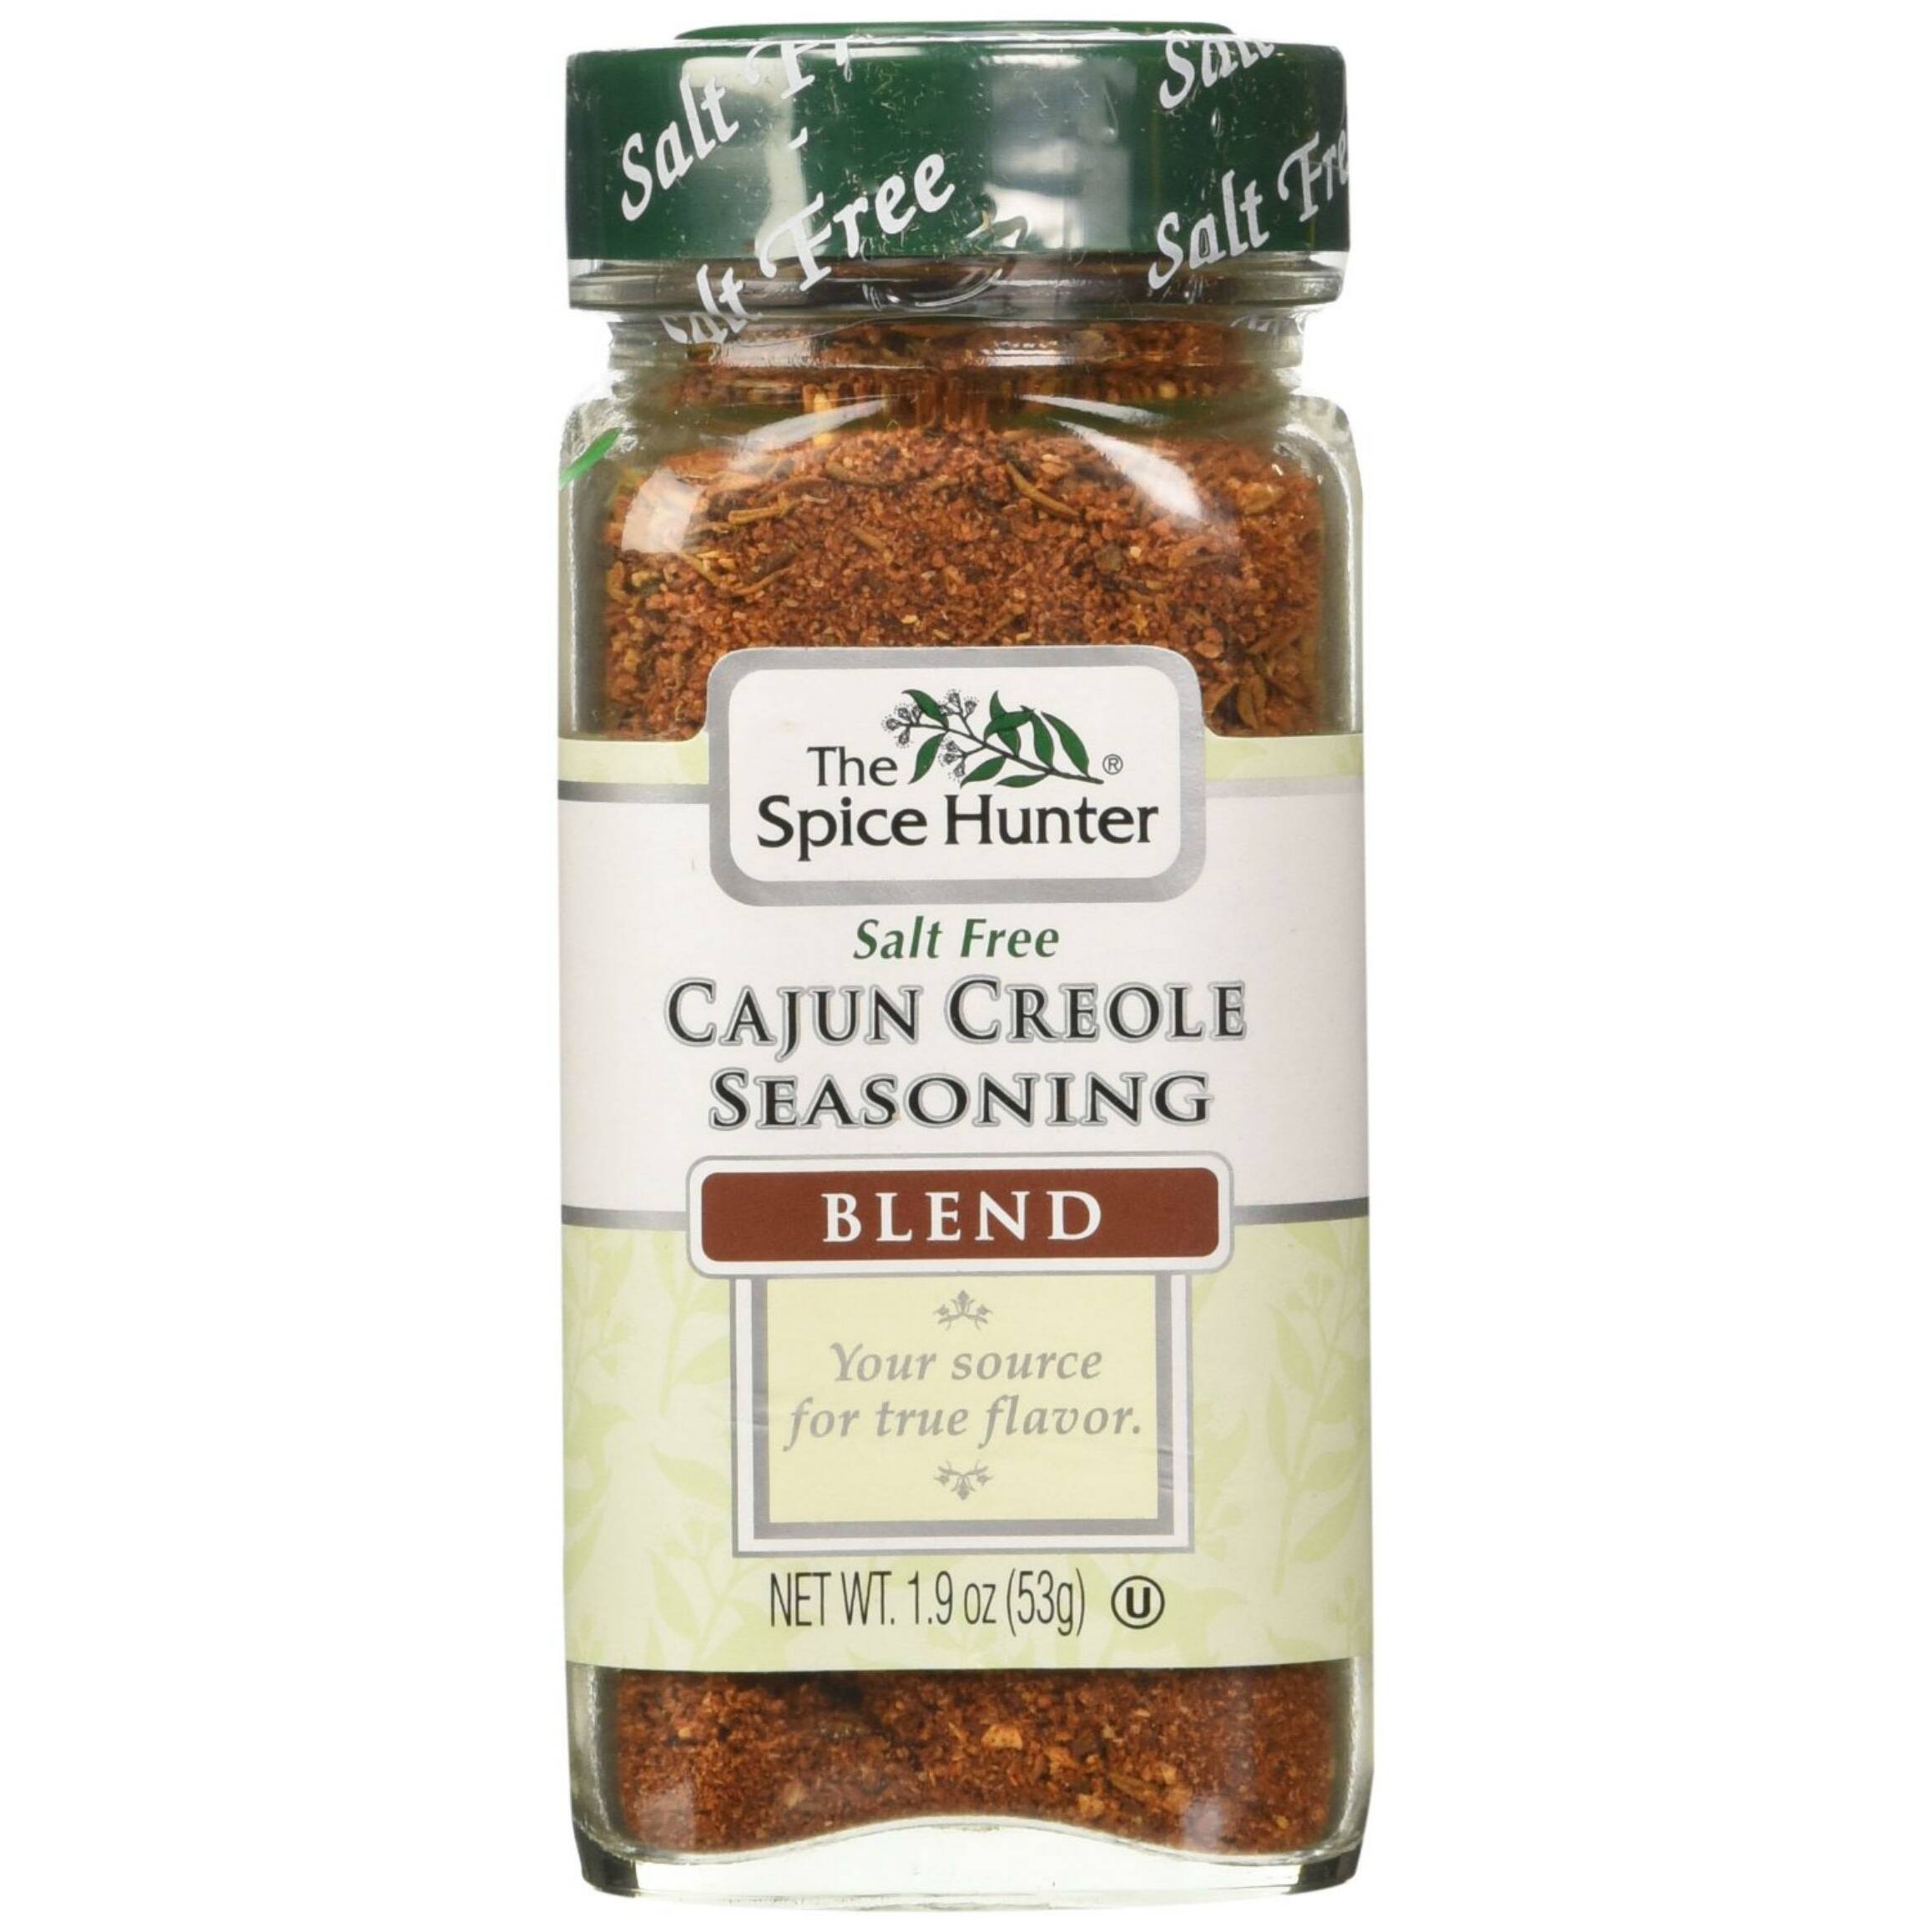 https://www.mercadomagico.com/images/thumbnails/2315/2315/detailed/726/the-spice-hunter-salt-free-cajun-creole-seasoning-blend-1.9-oz.jpg